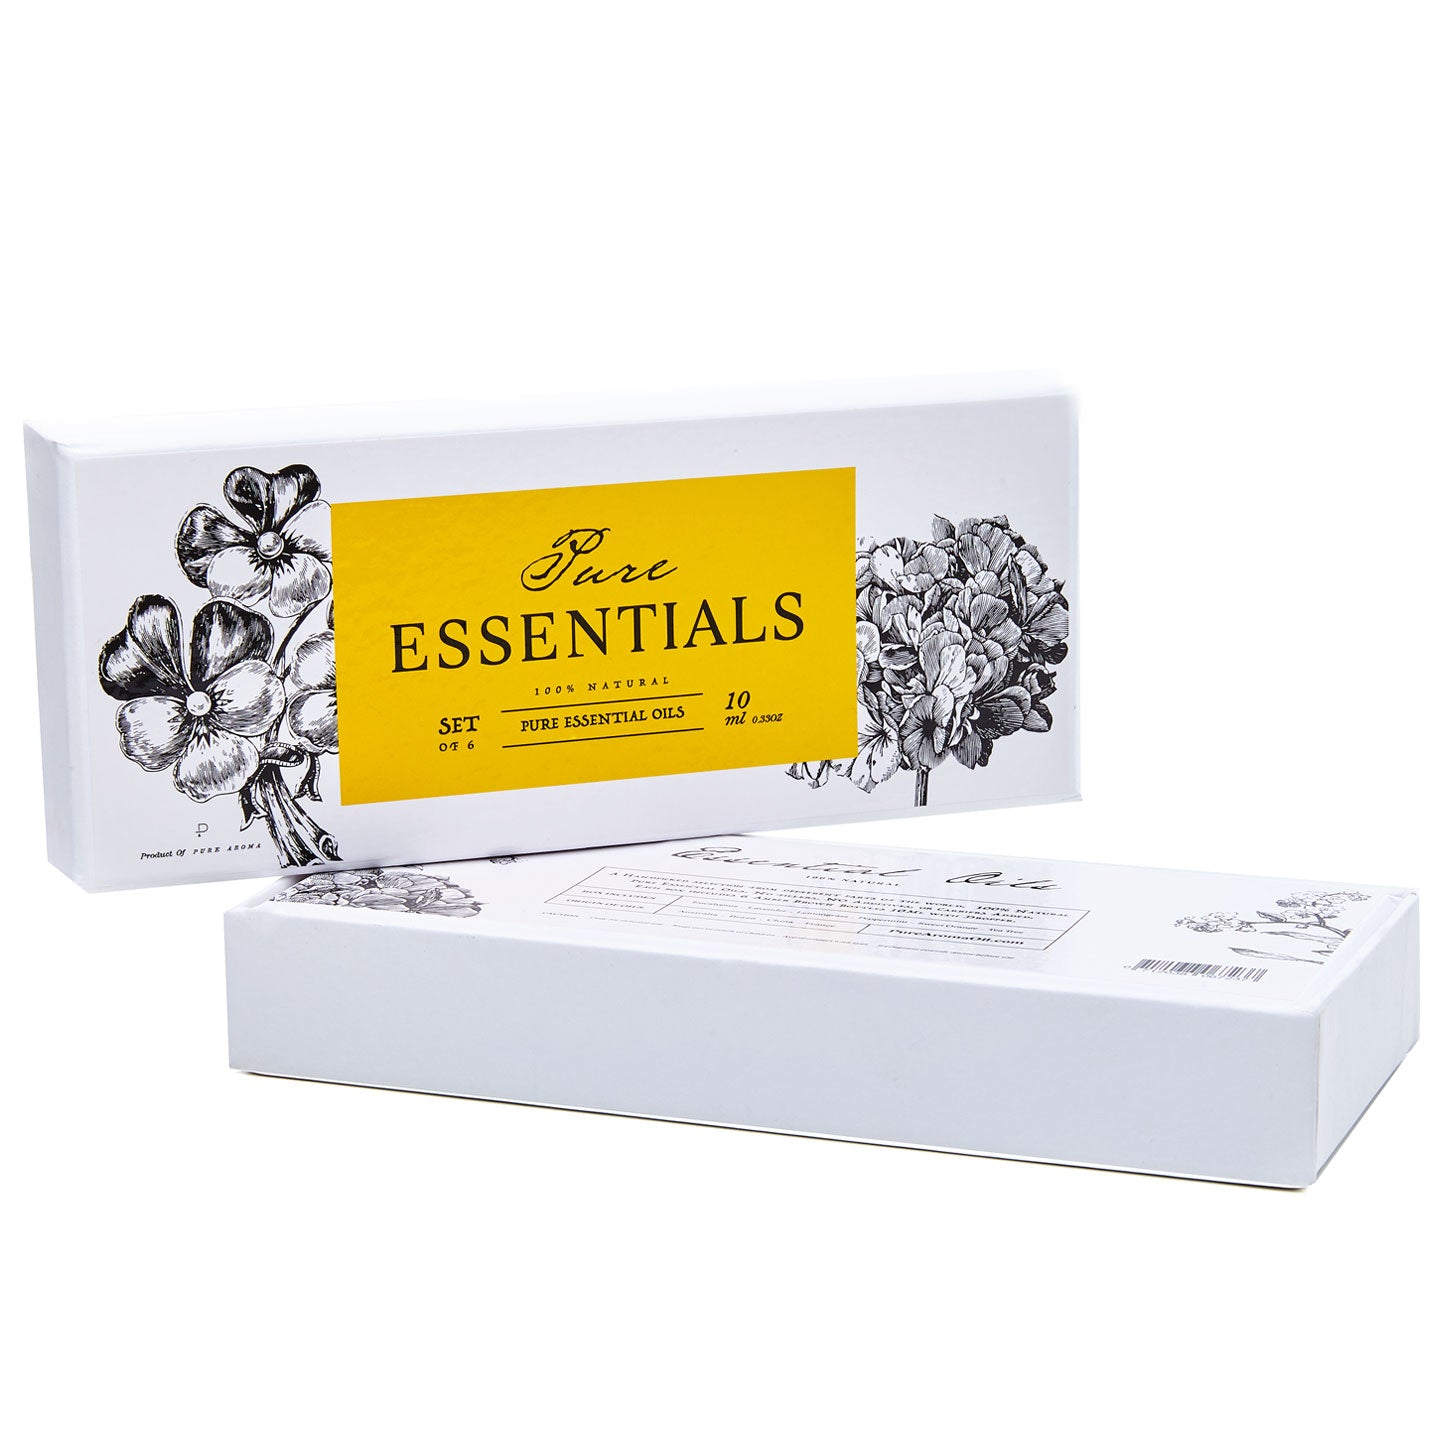 PURE Essentials Oils - Top 6 Aromatherapy Oils in 1 Box (10 Ml)